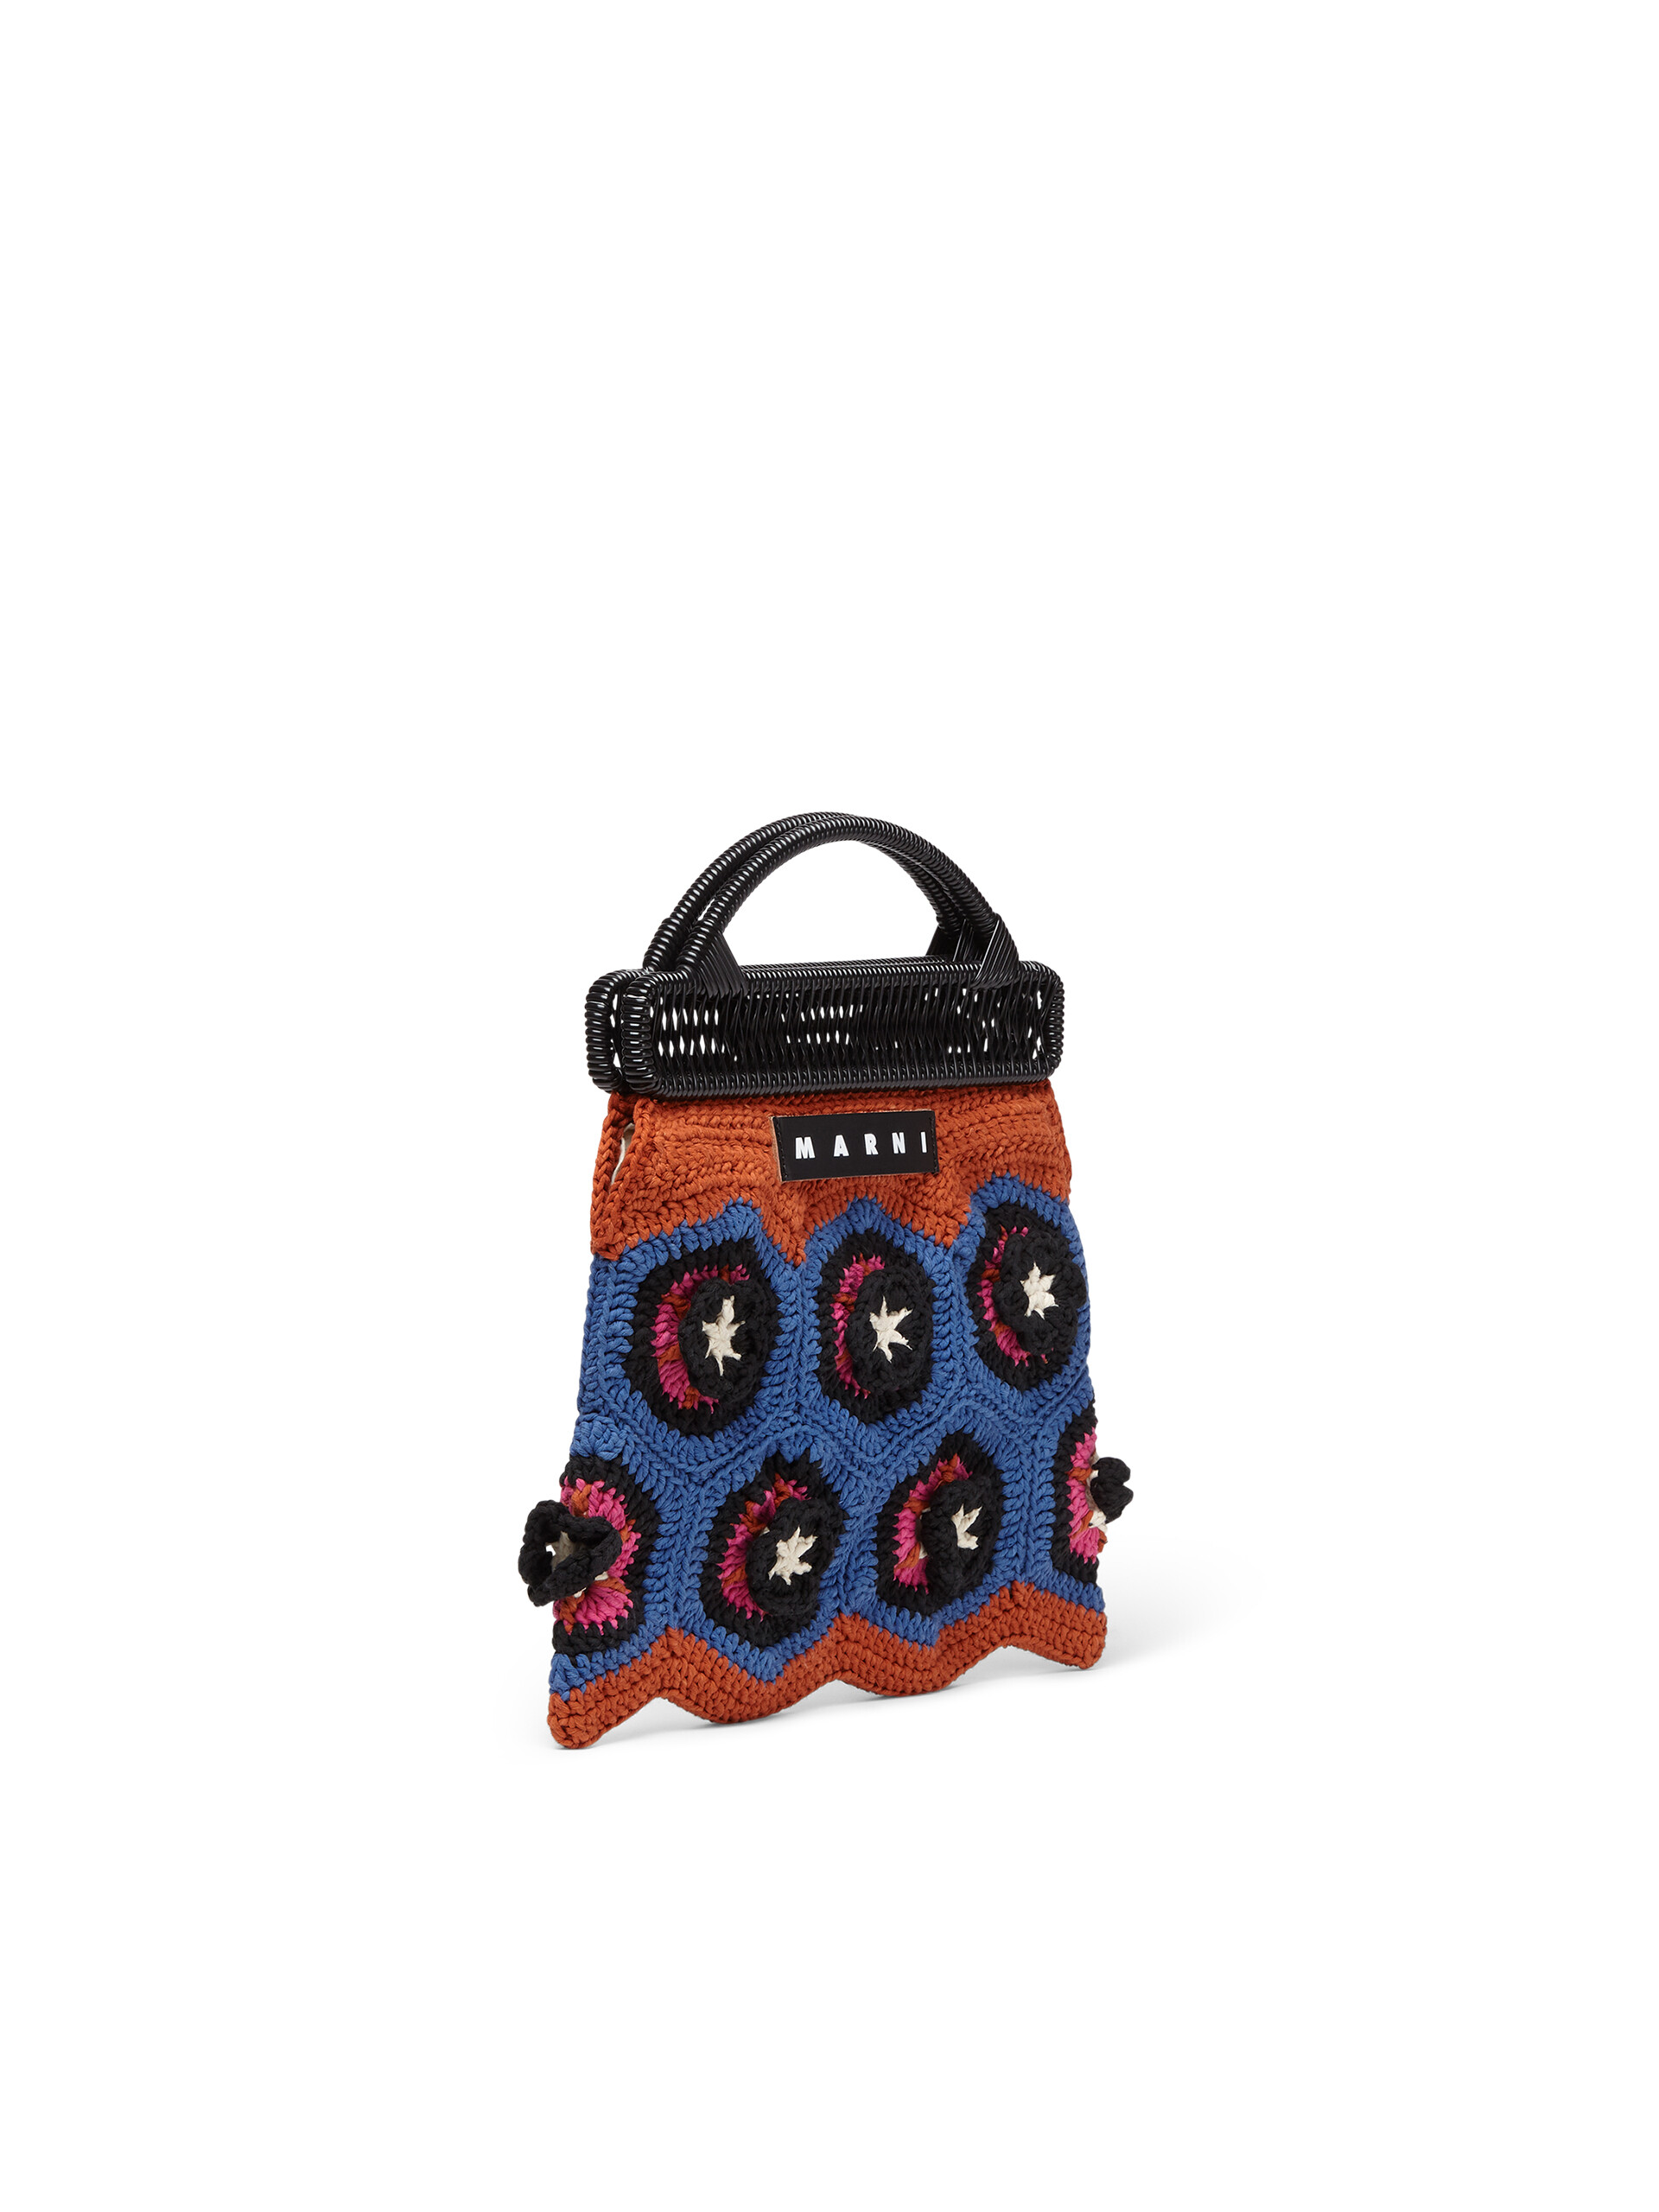 MARNI MARKET bag in orange and blue crochet cotton - Furniture - Image 2